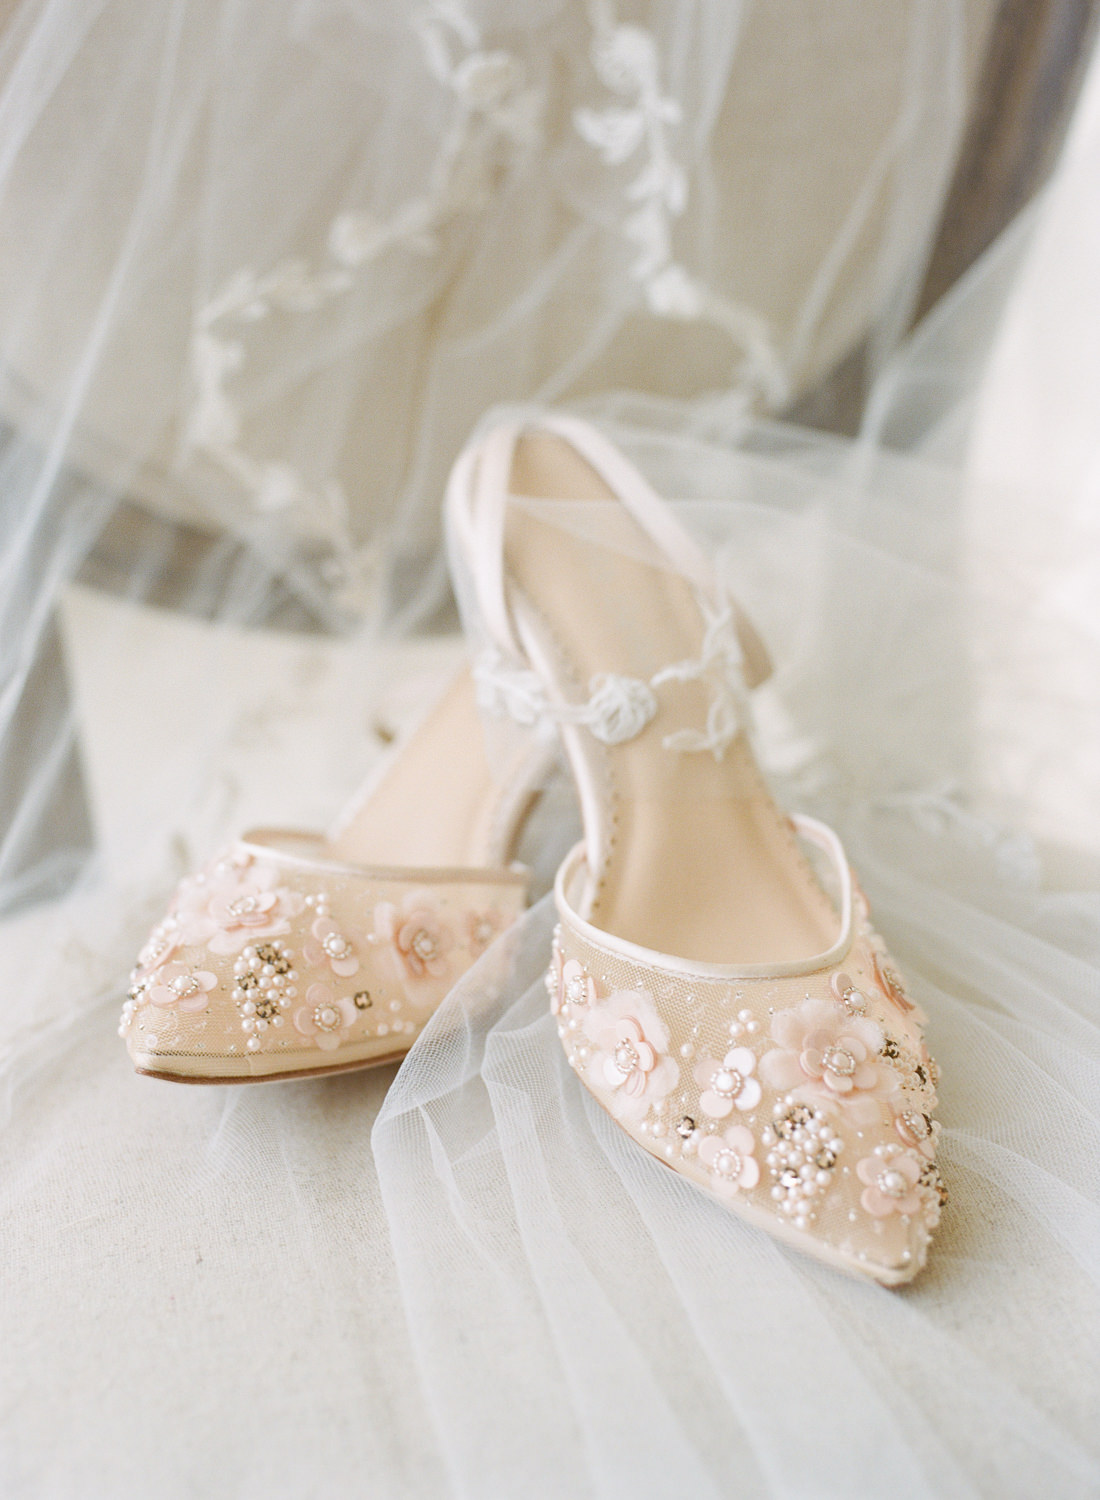 Bella Belle bridal shoes and wedding veil, St Louis Fine Art Film Wedding Photographer Erica Robnett Photography